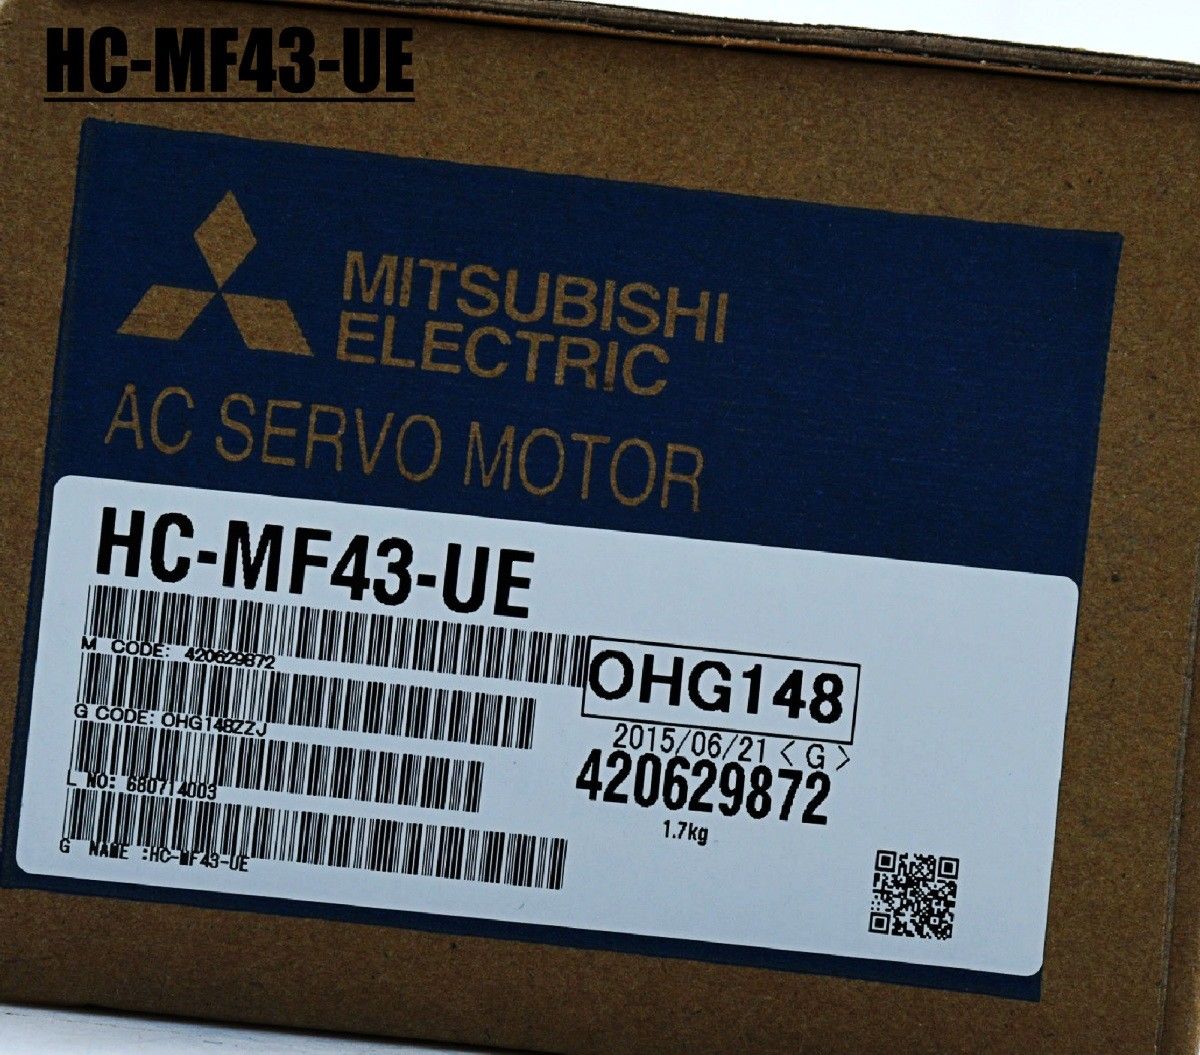 Original New Mitsubishi Servo Motor HC-MF43-UE IN BOX HCMF43UE - Click Image to Close